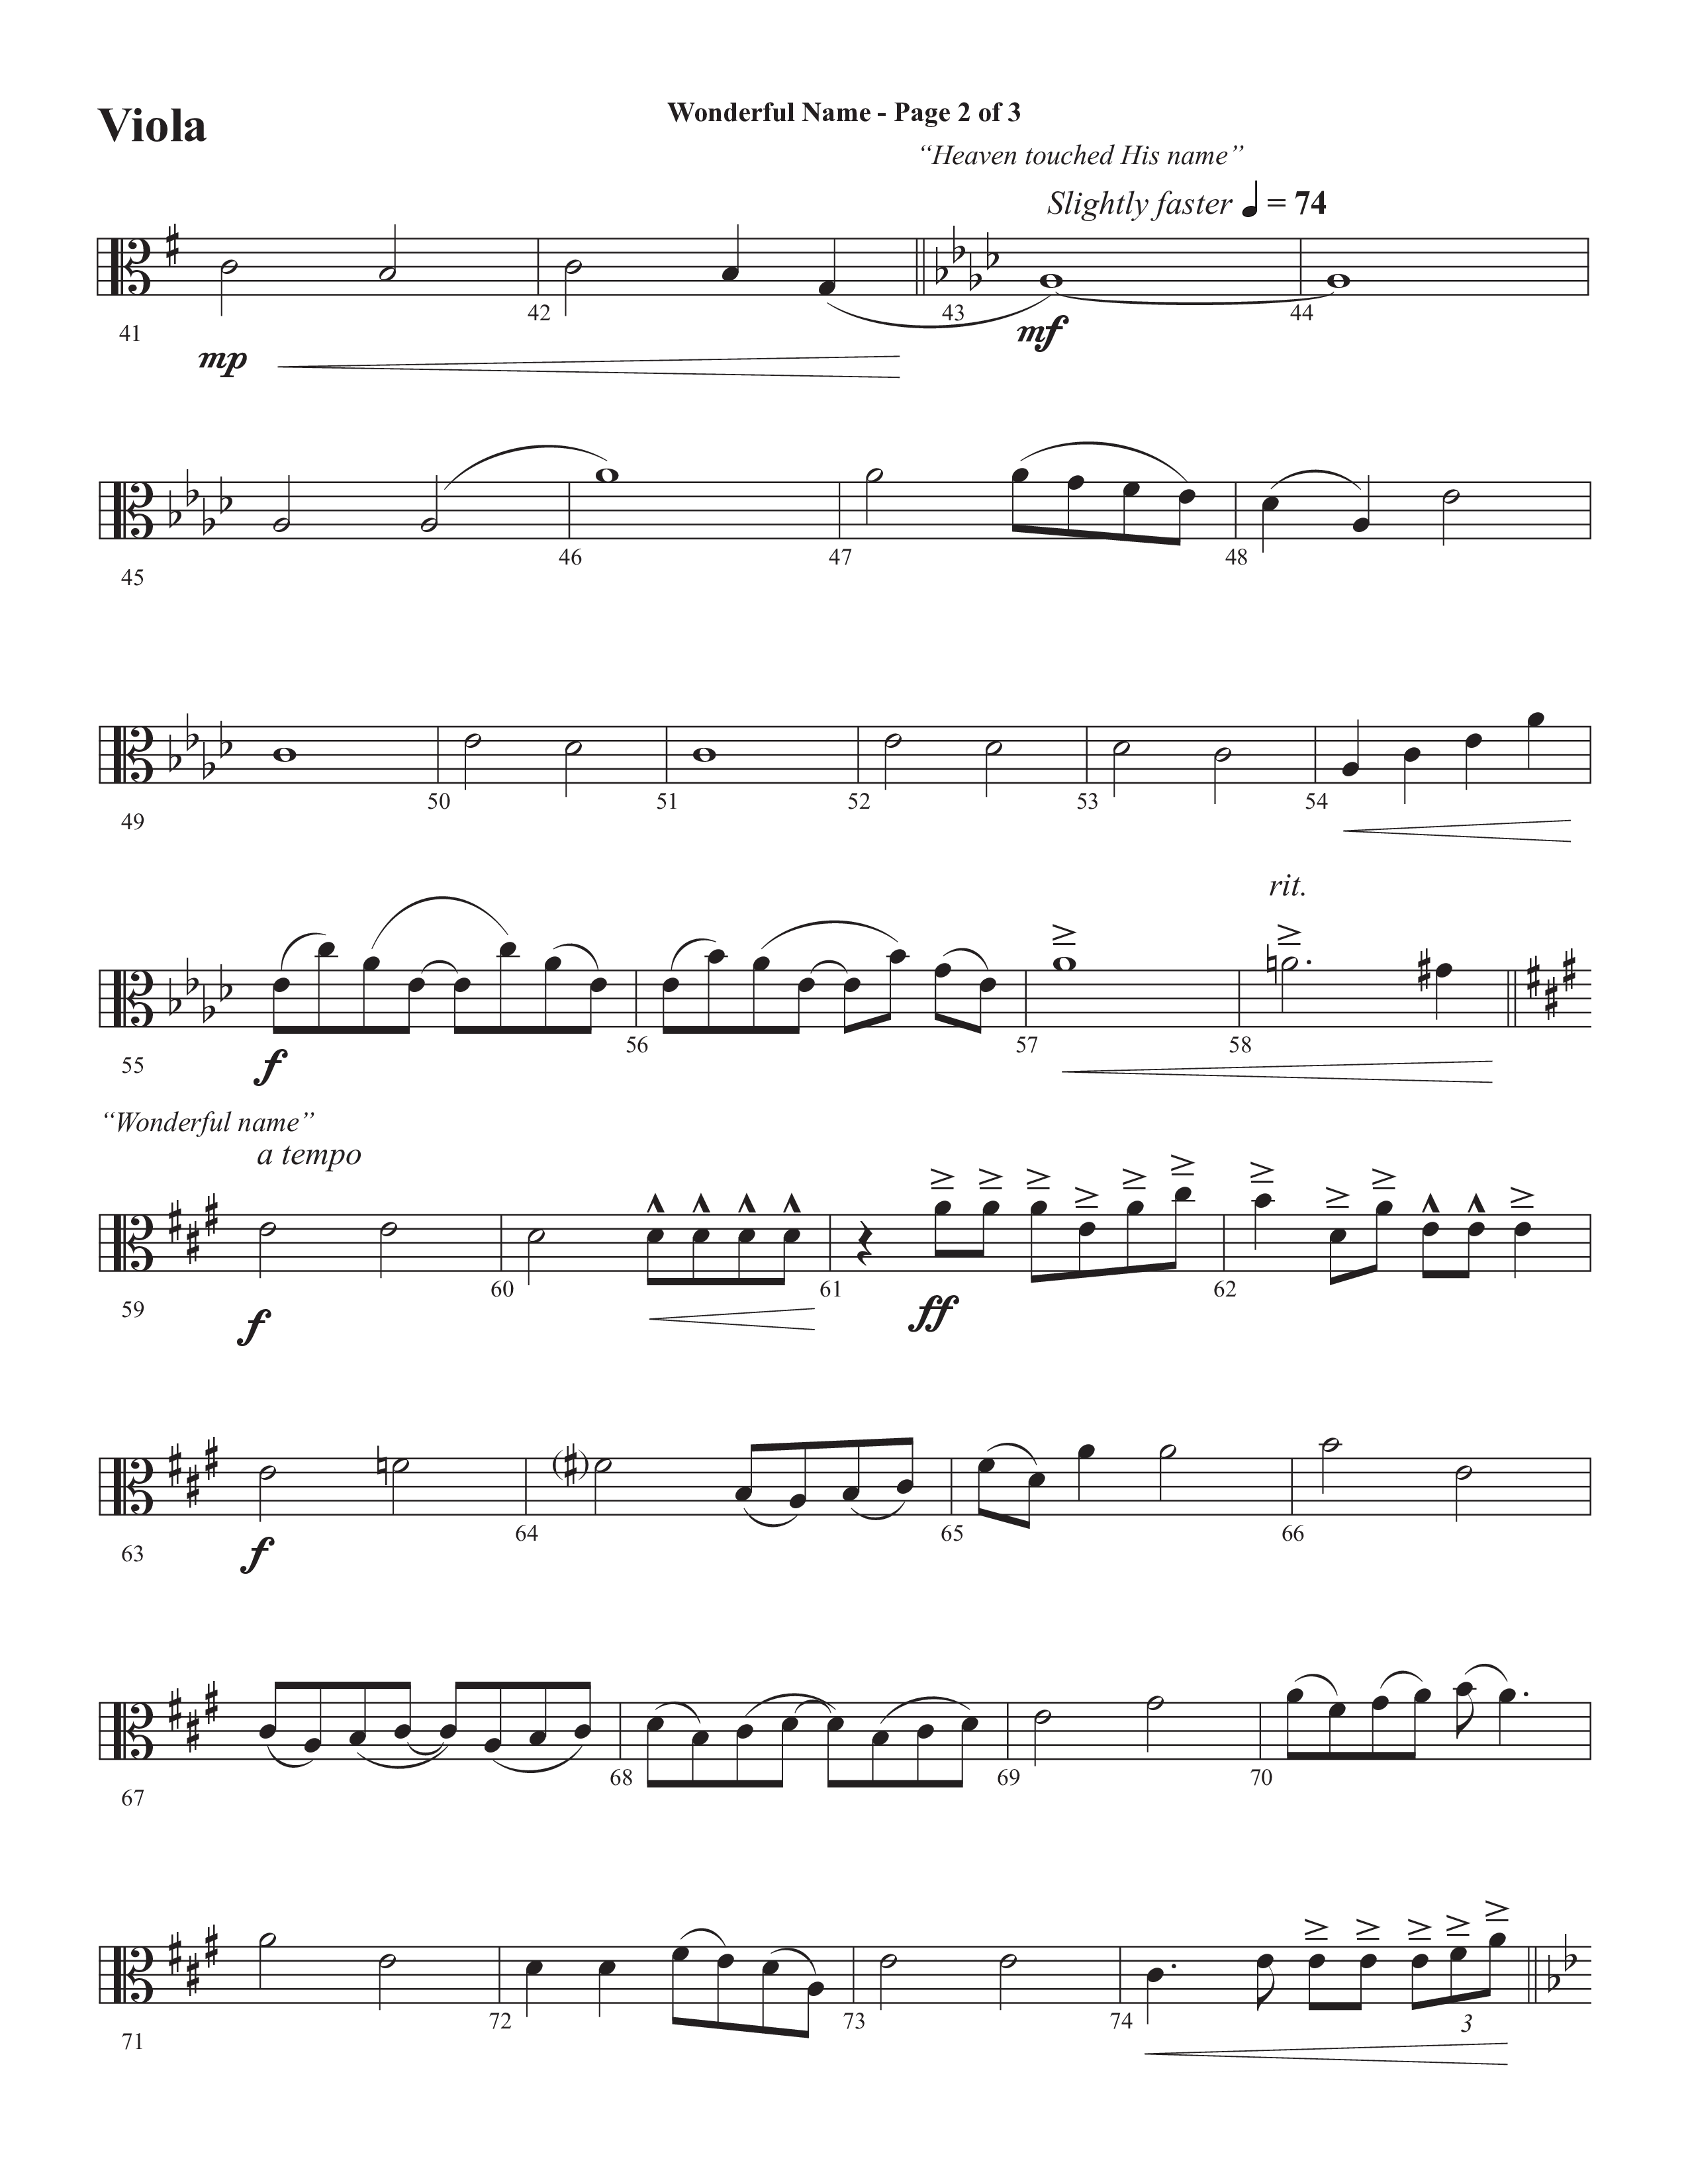 Wonderful Name (Choral Anthem SATB) Viola (Semsen Music / Arr. John Bolin / Orch. Cliff Duren)